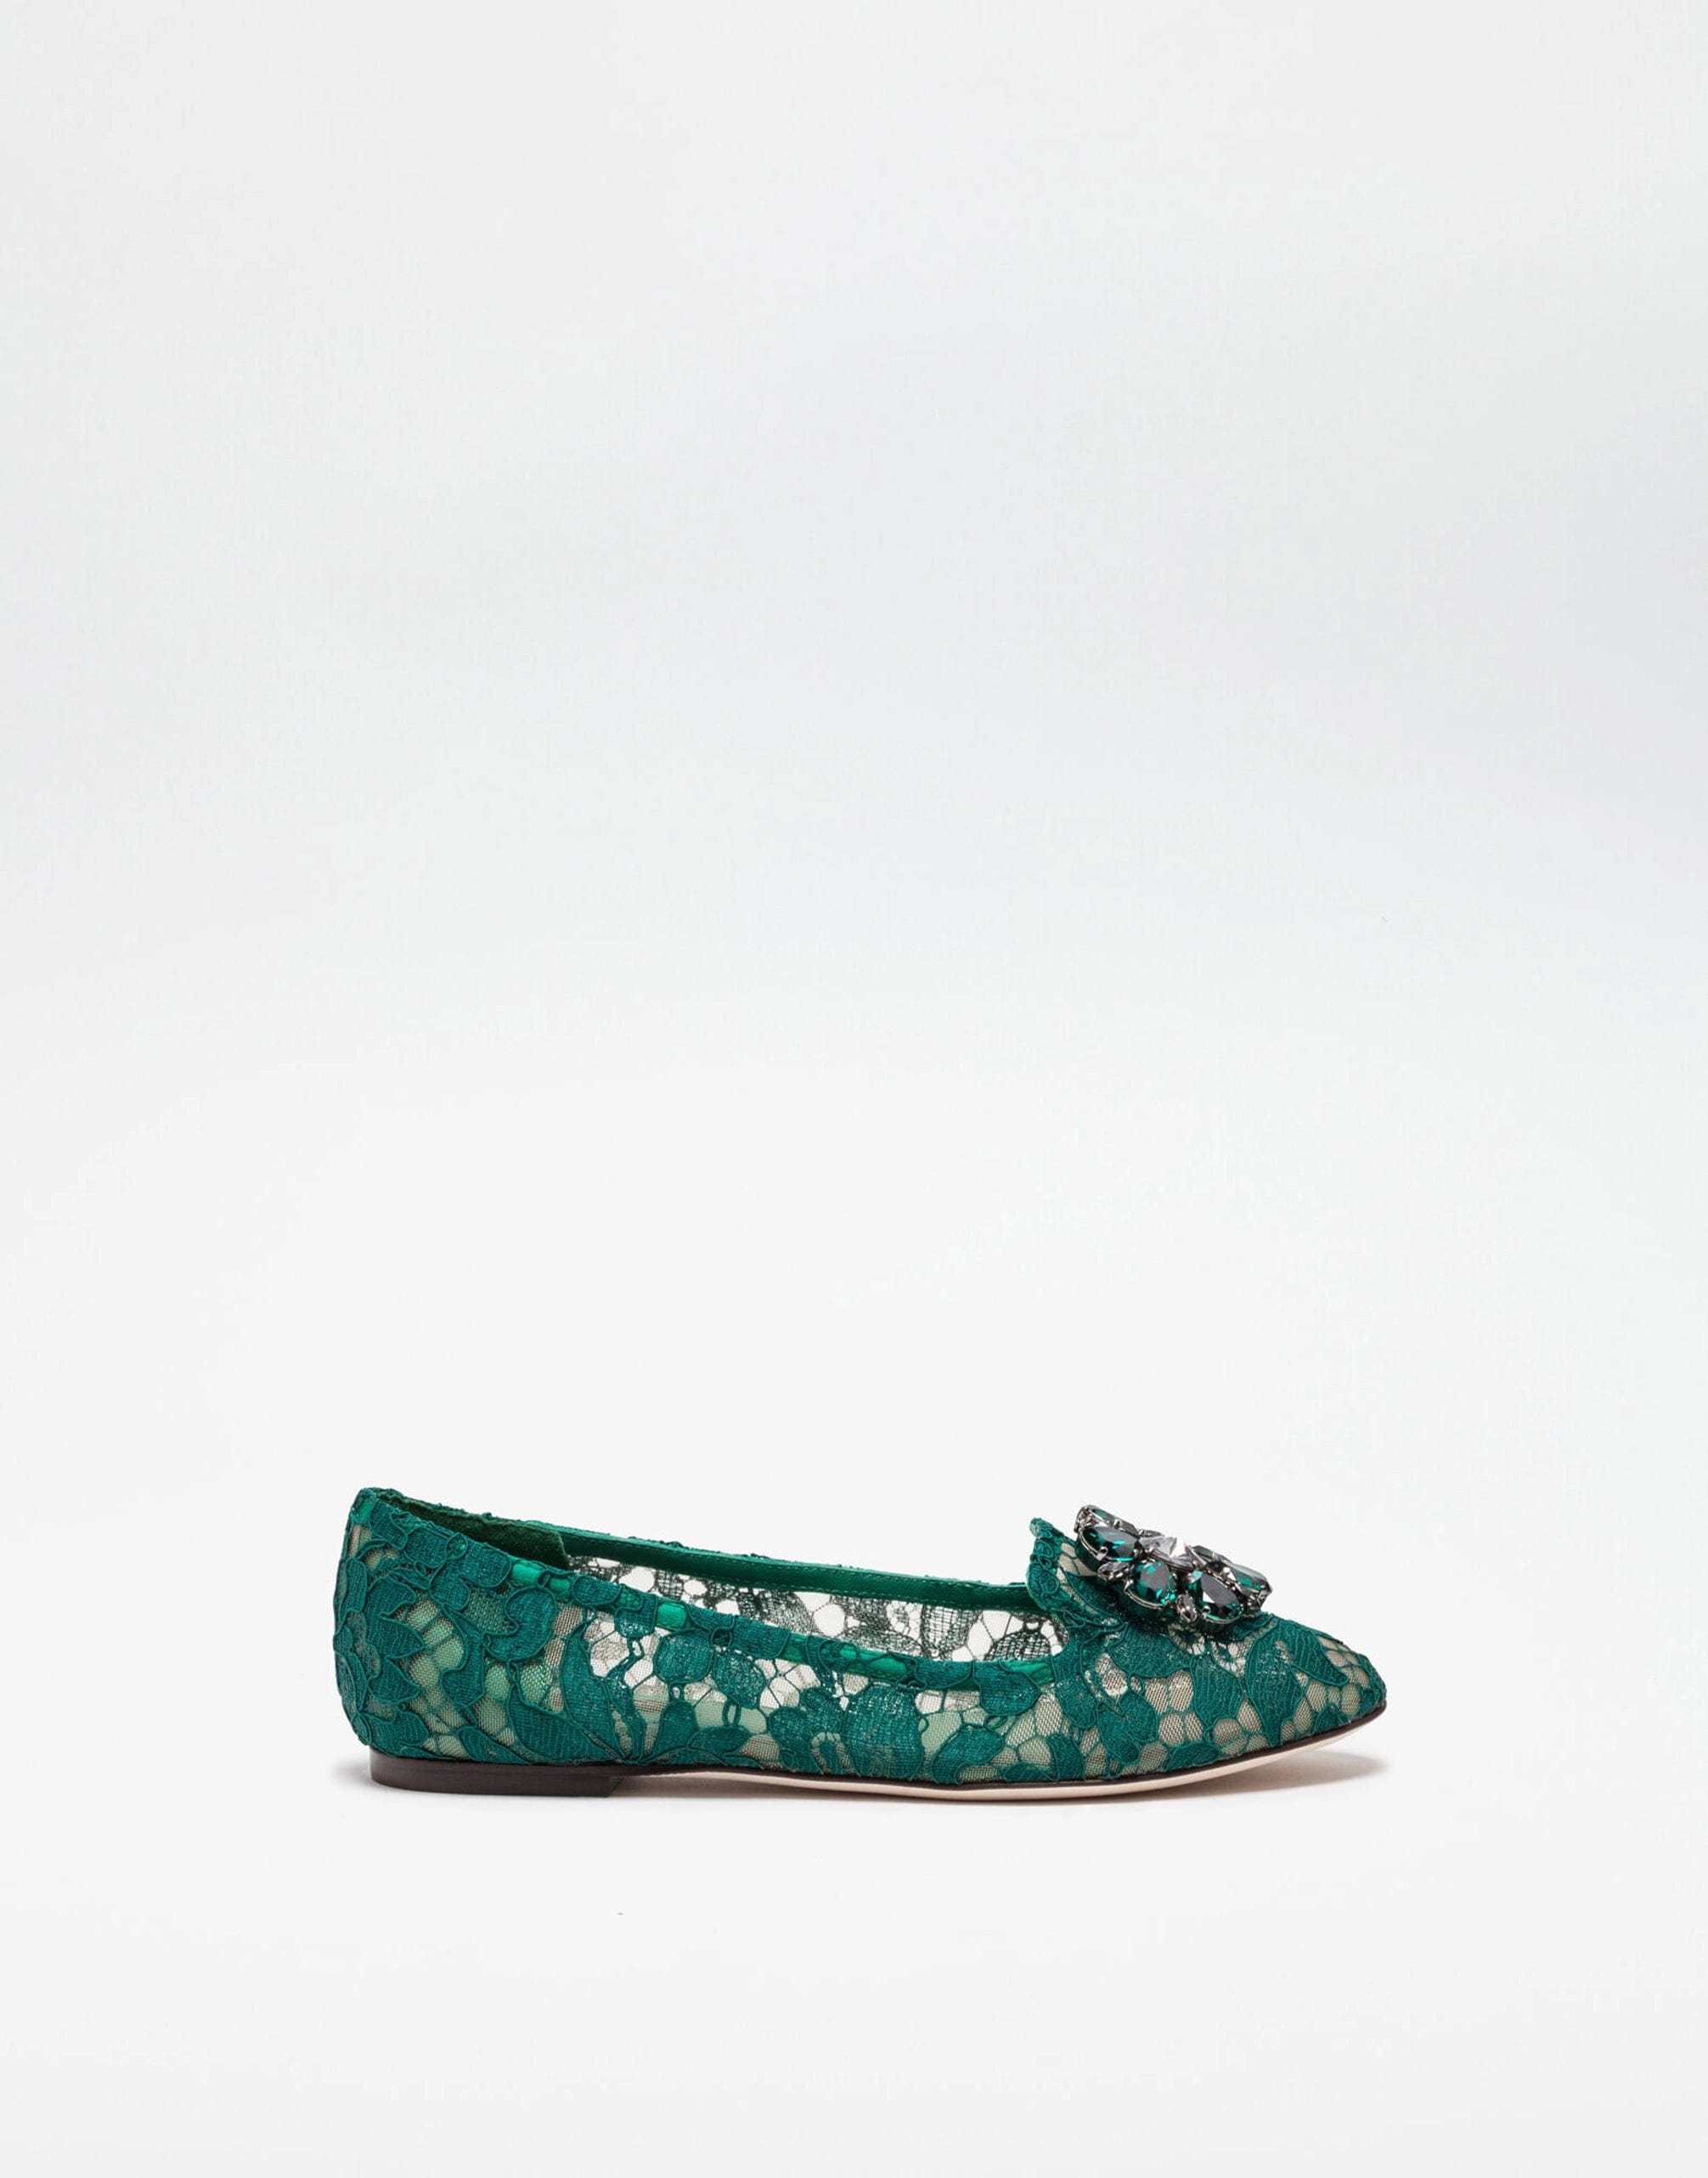 Dolce & Gabbana Vally Taormina Lace Slippers